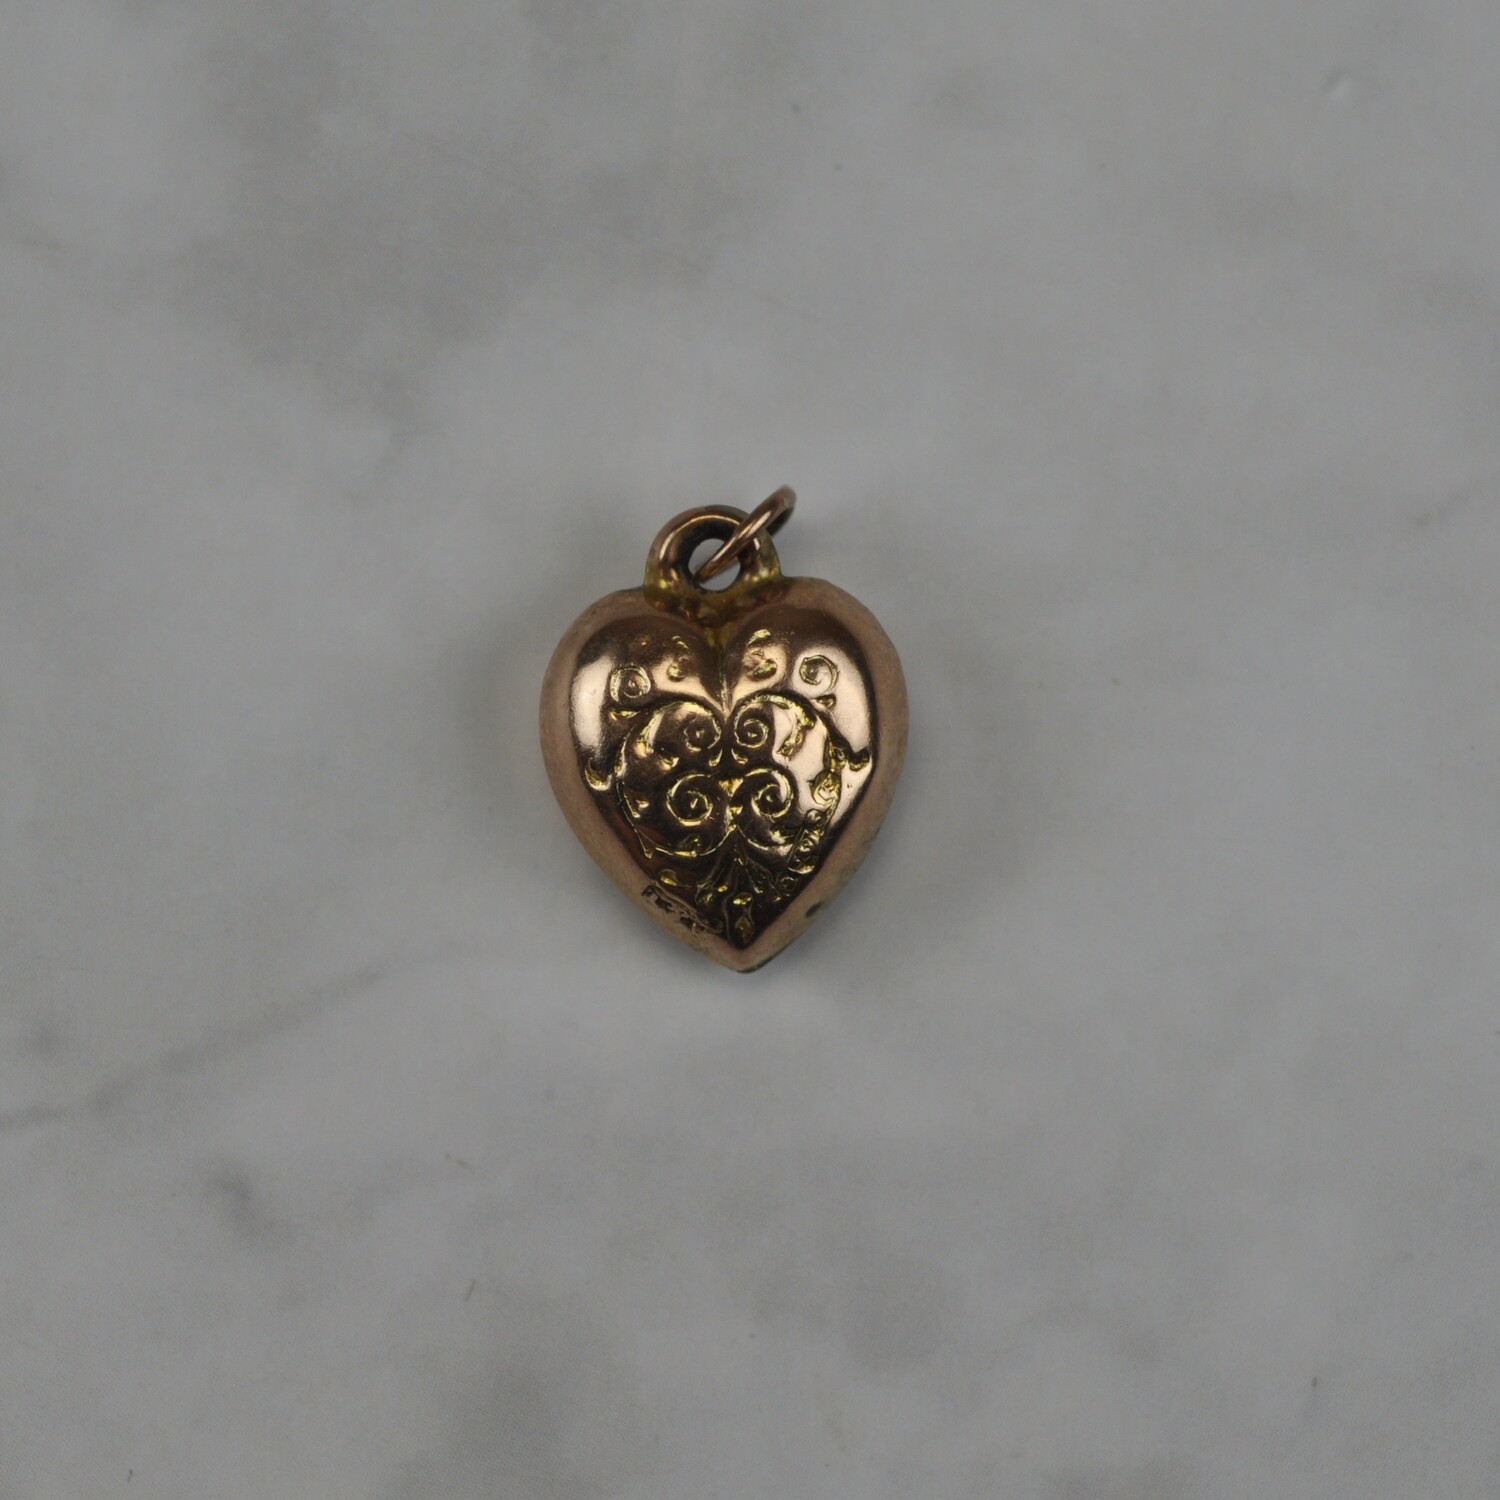 Ornate Love Heart Charm/Pendant - SOLD